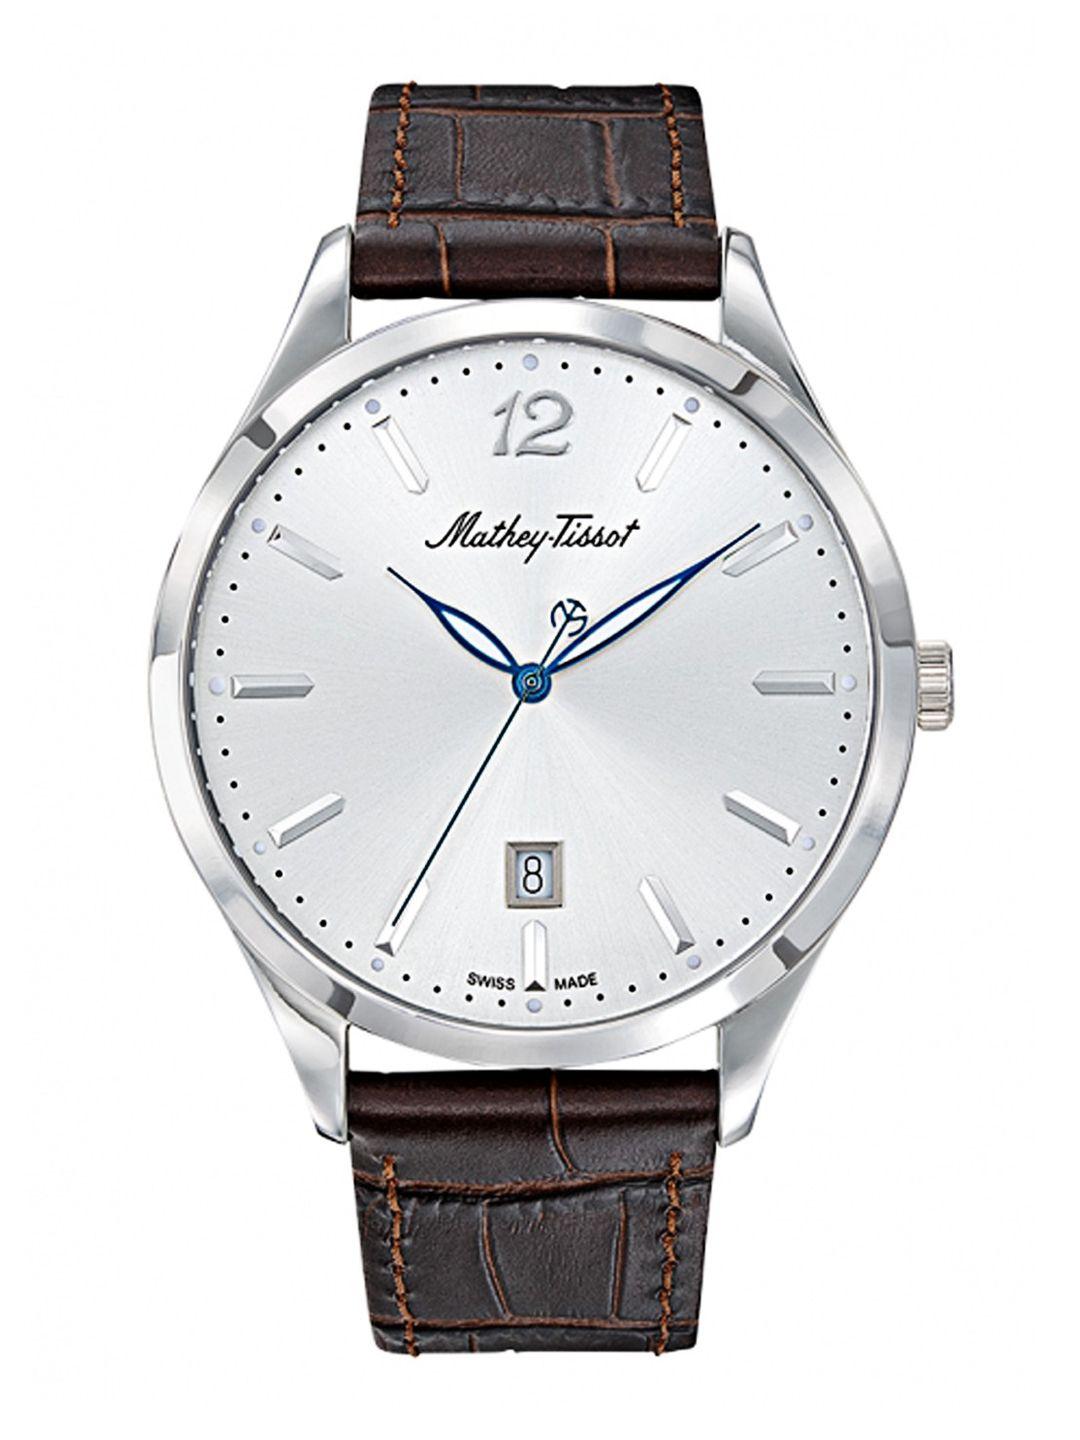 mathey-tissot-men-silver-toned-analogue-watch-h411as